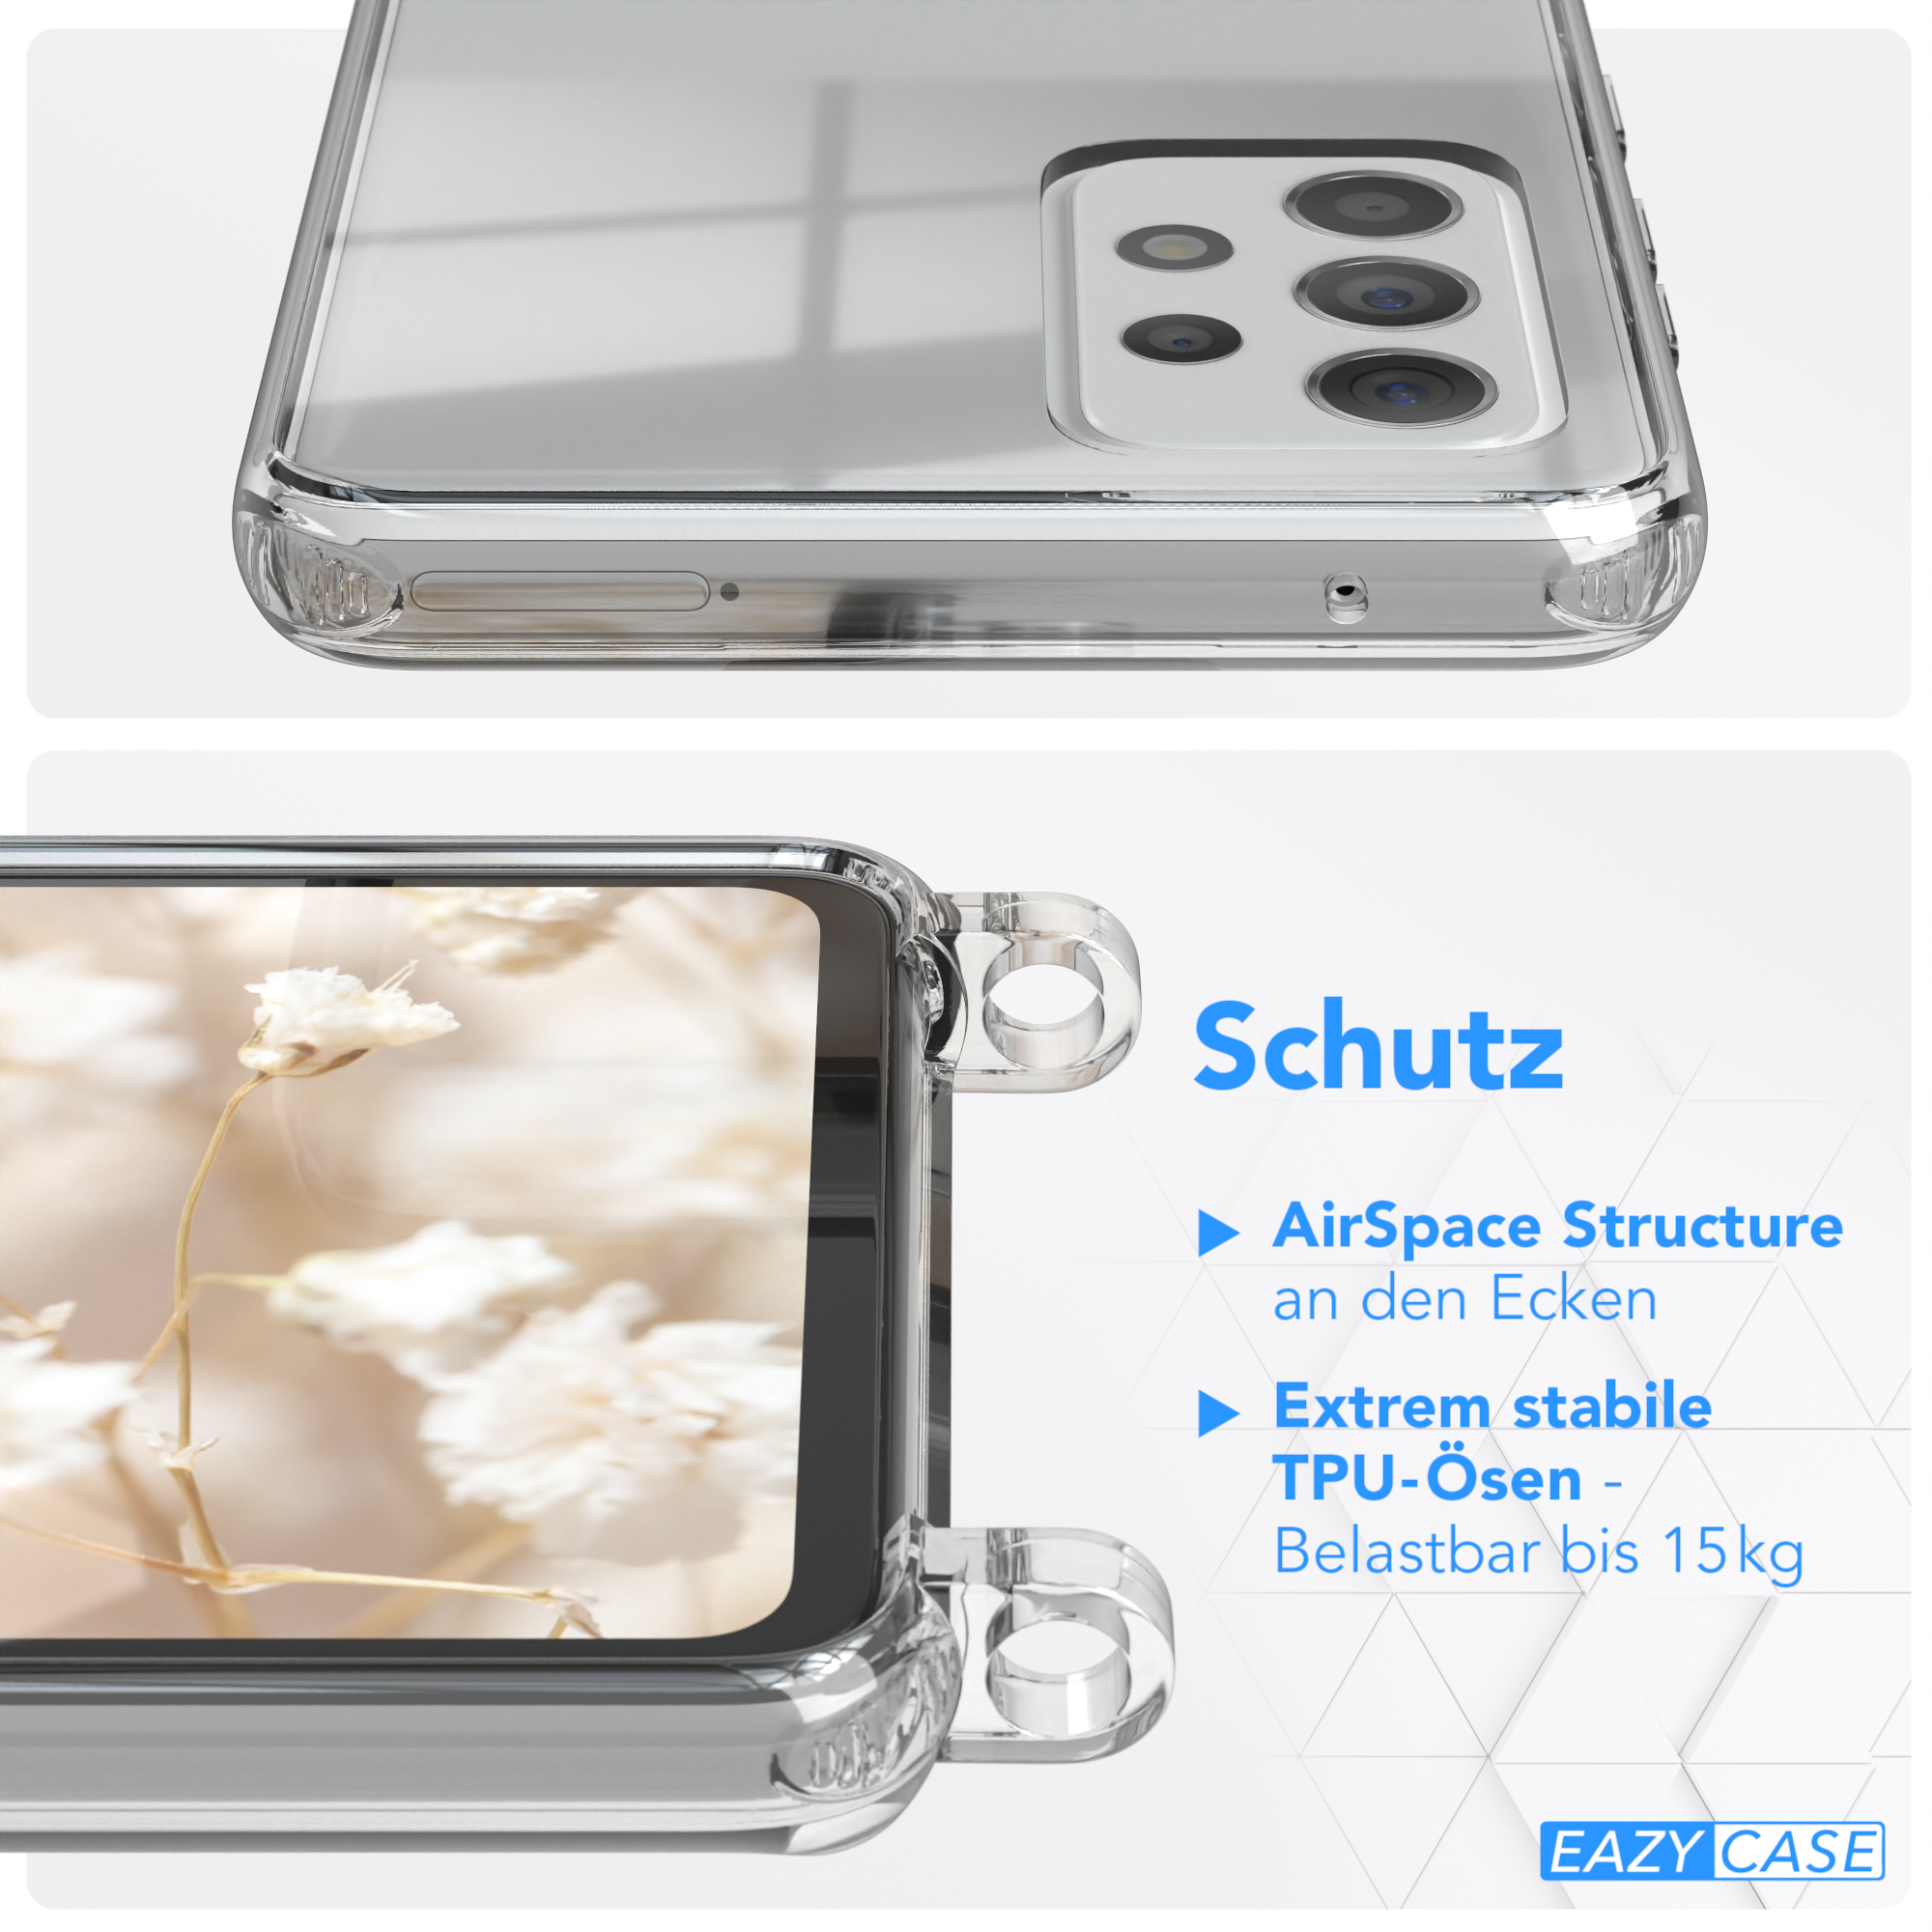 Umhängetasche, CASE Handyhülle Rot 5G, A52s / A52 Transparente Kordel 5G / Braun Style, mit / A52 EAZY Samsung, Boho Galaxy